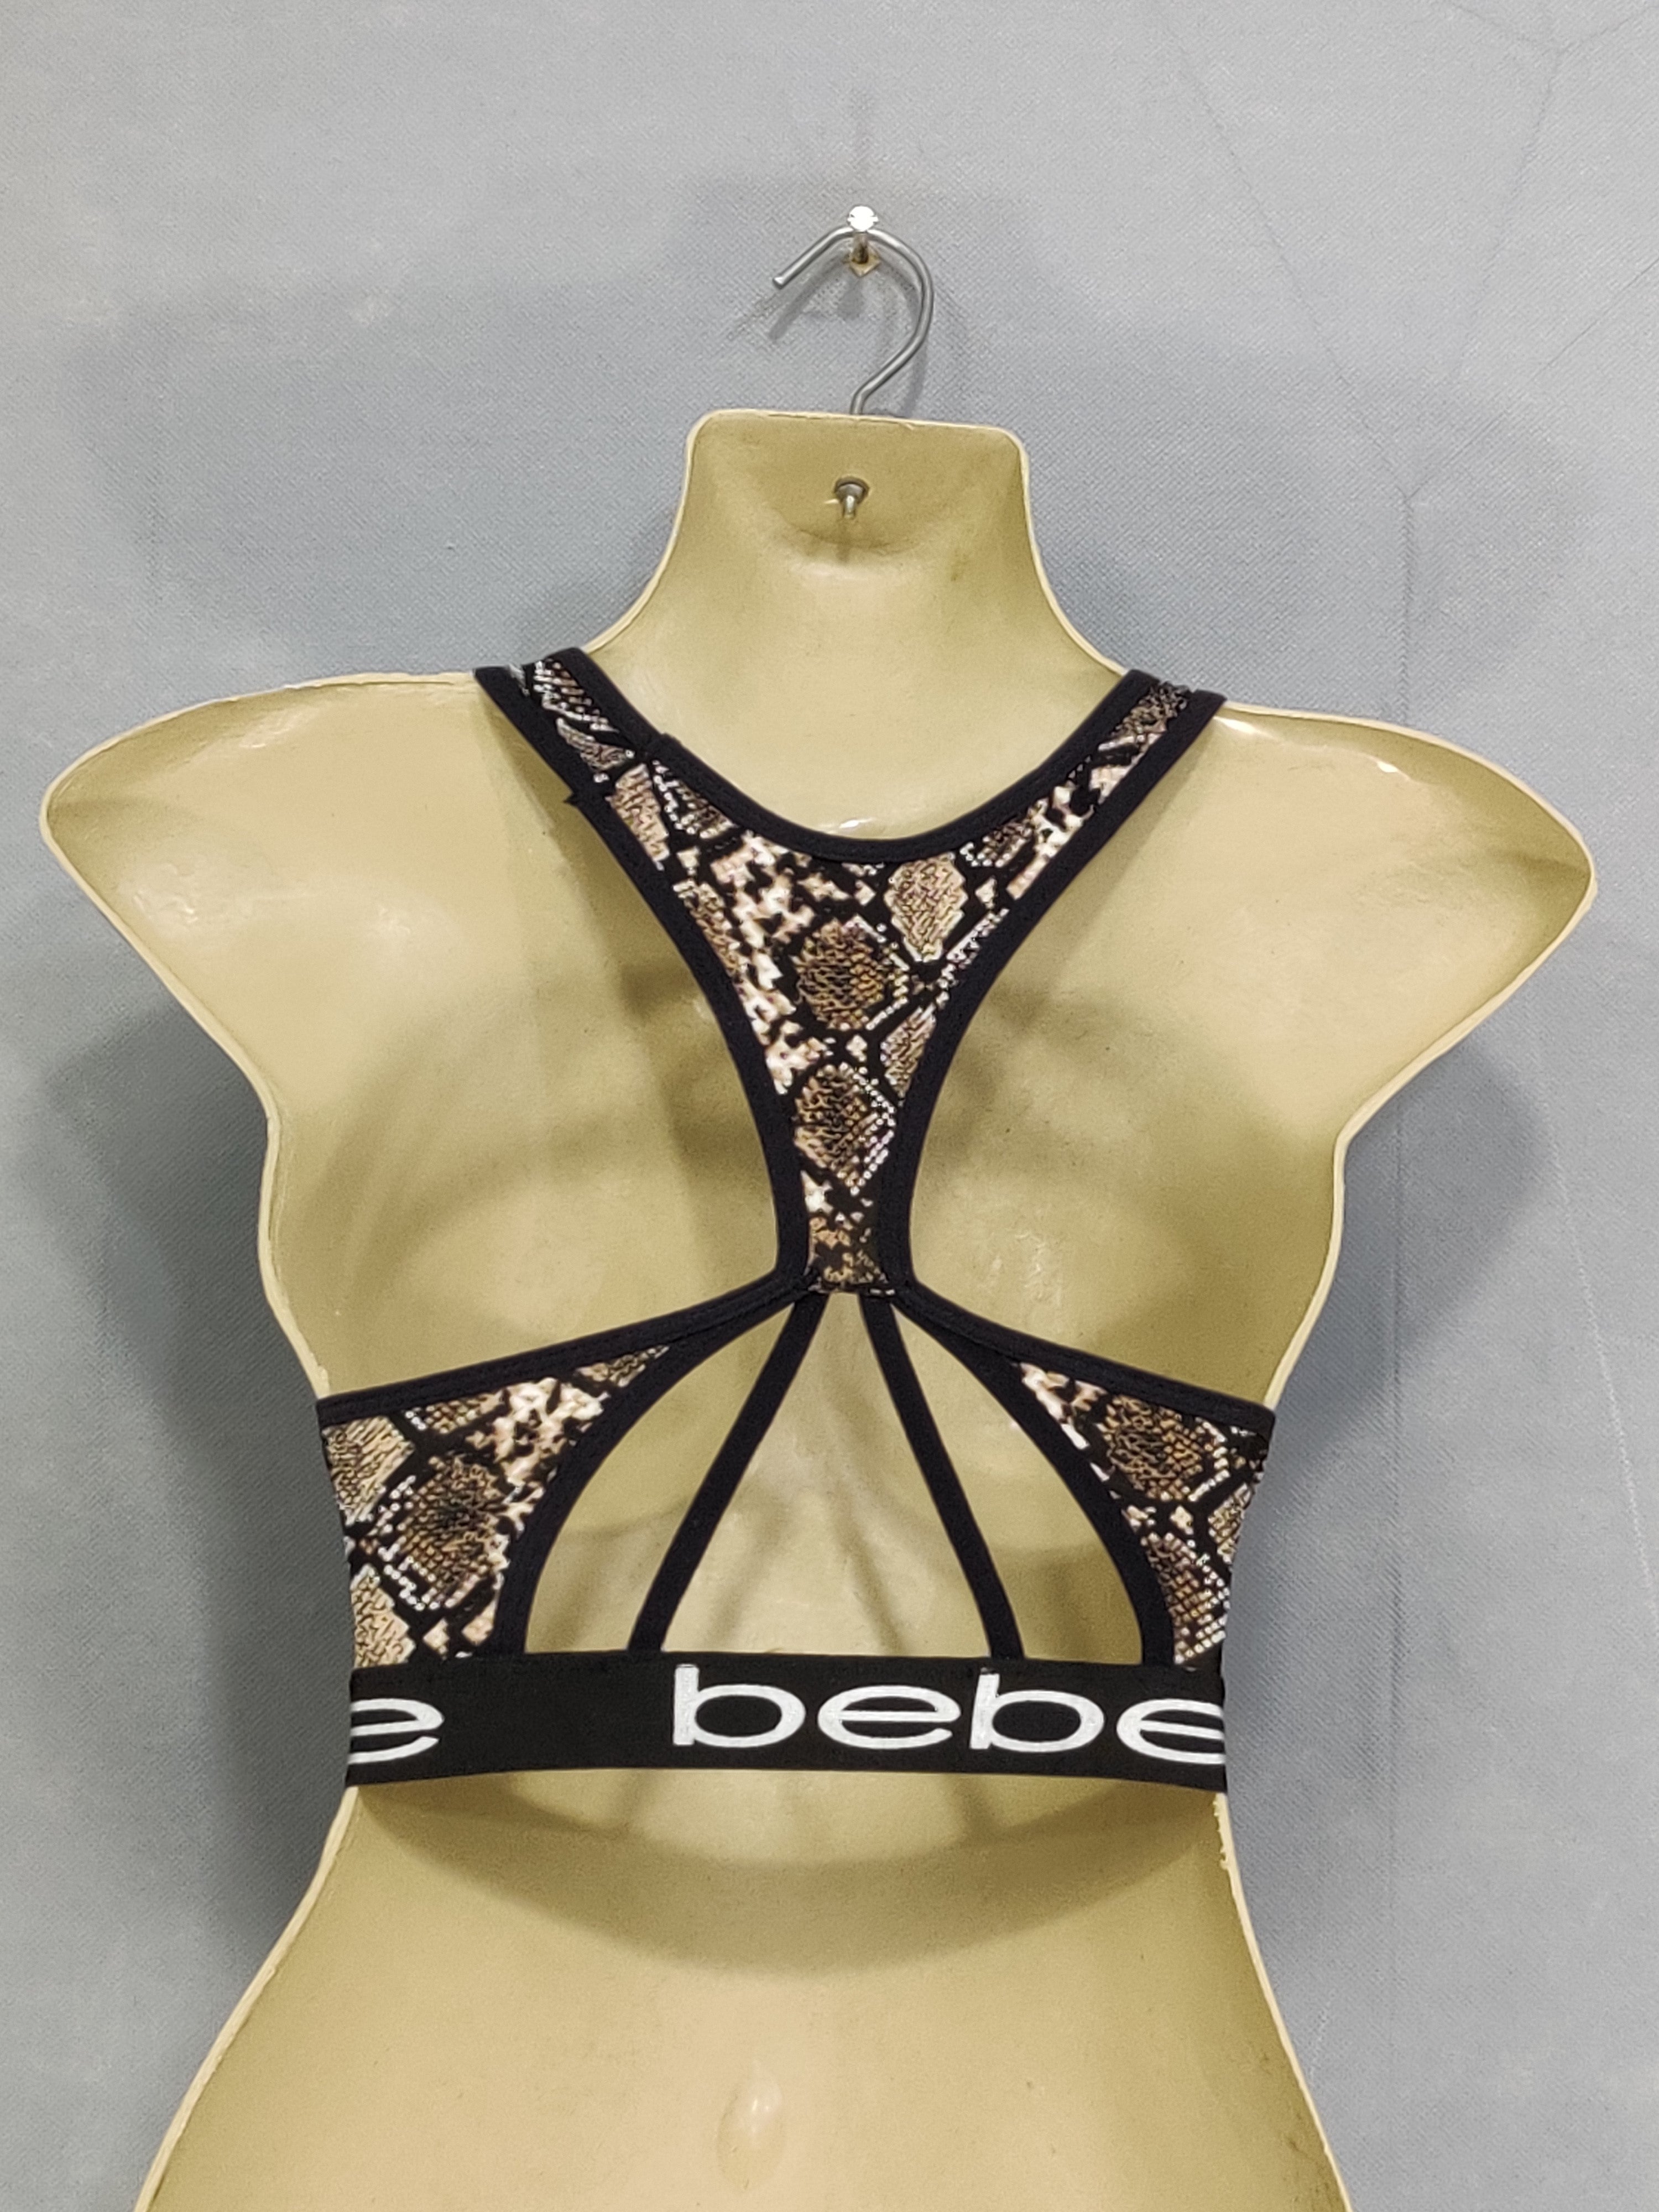 Bebe Branded Original Sports Gym Bra For Women